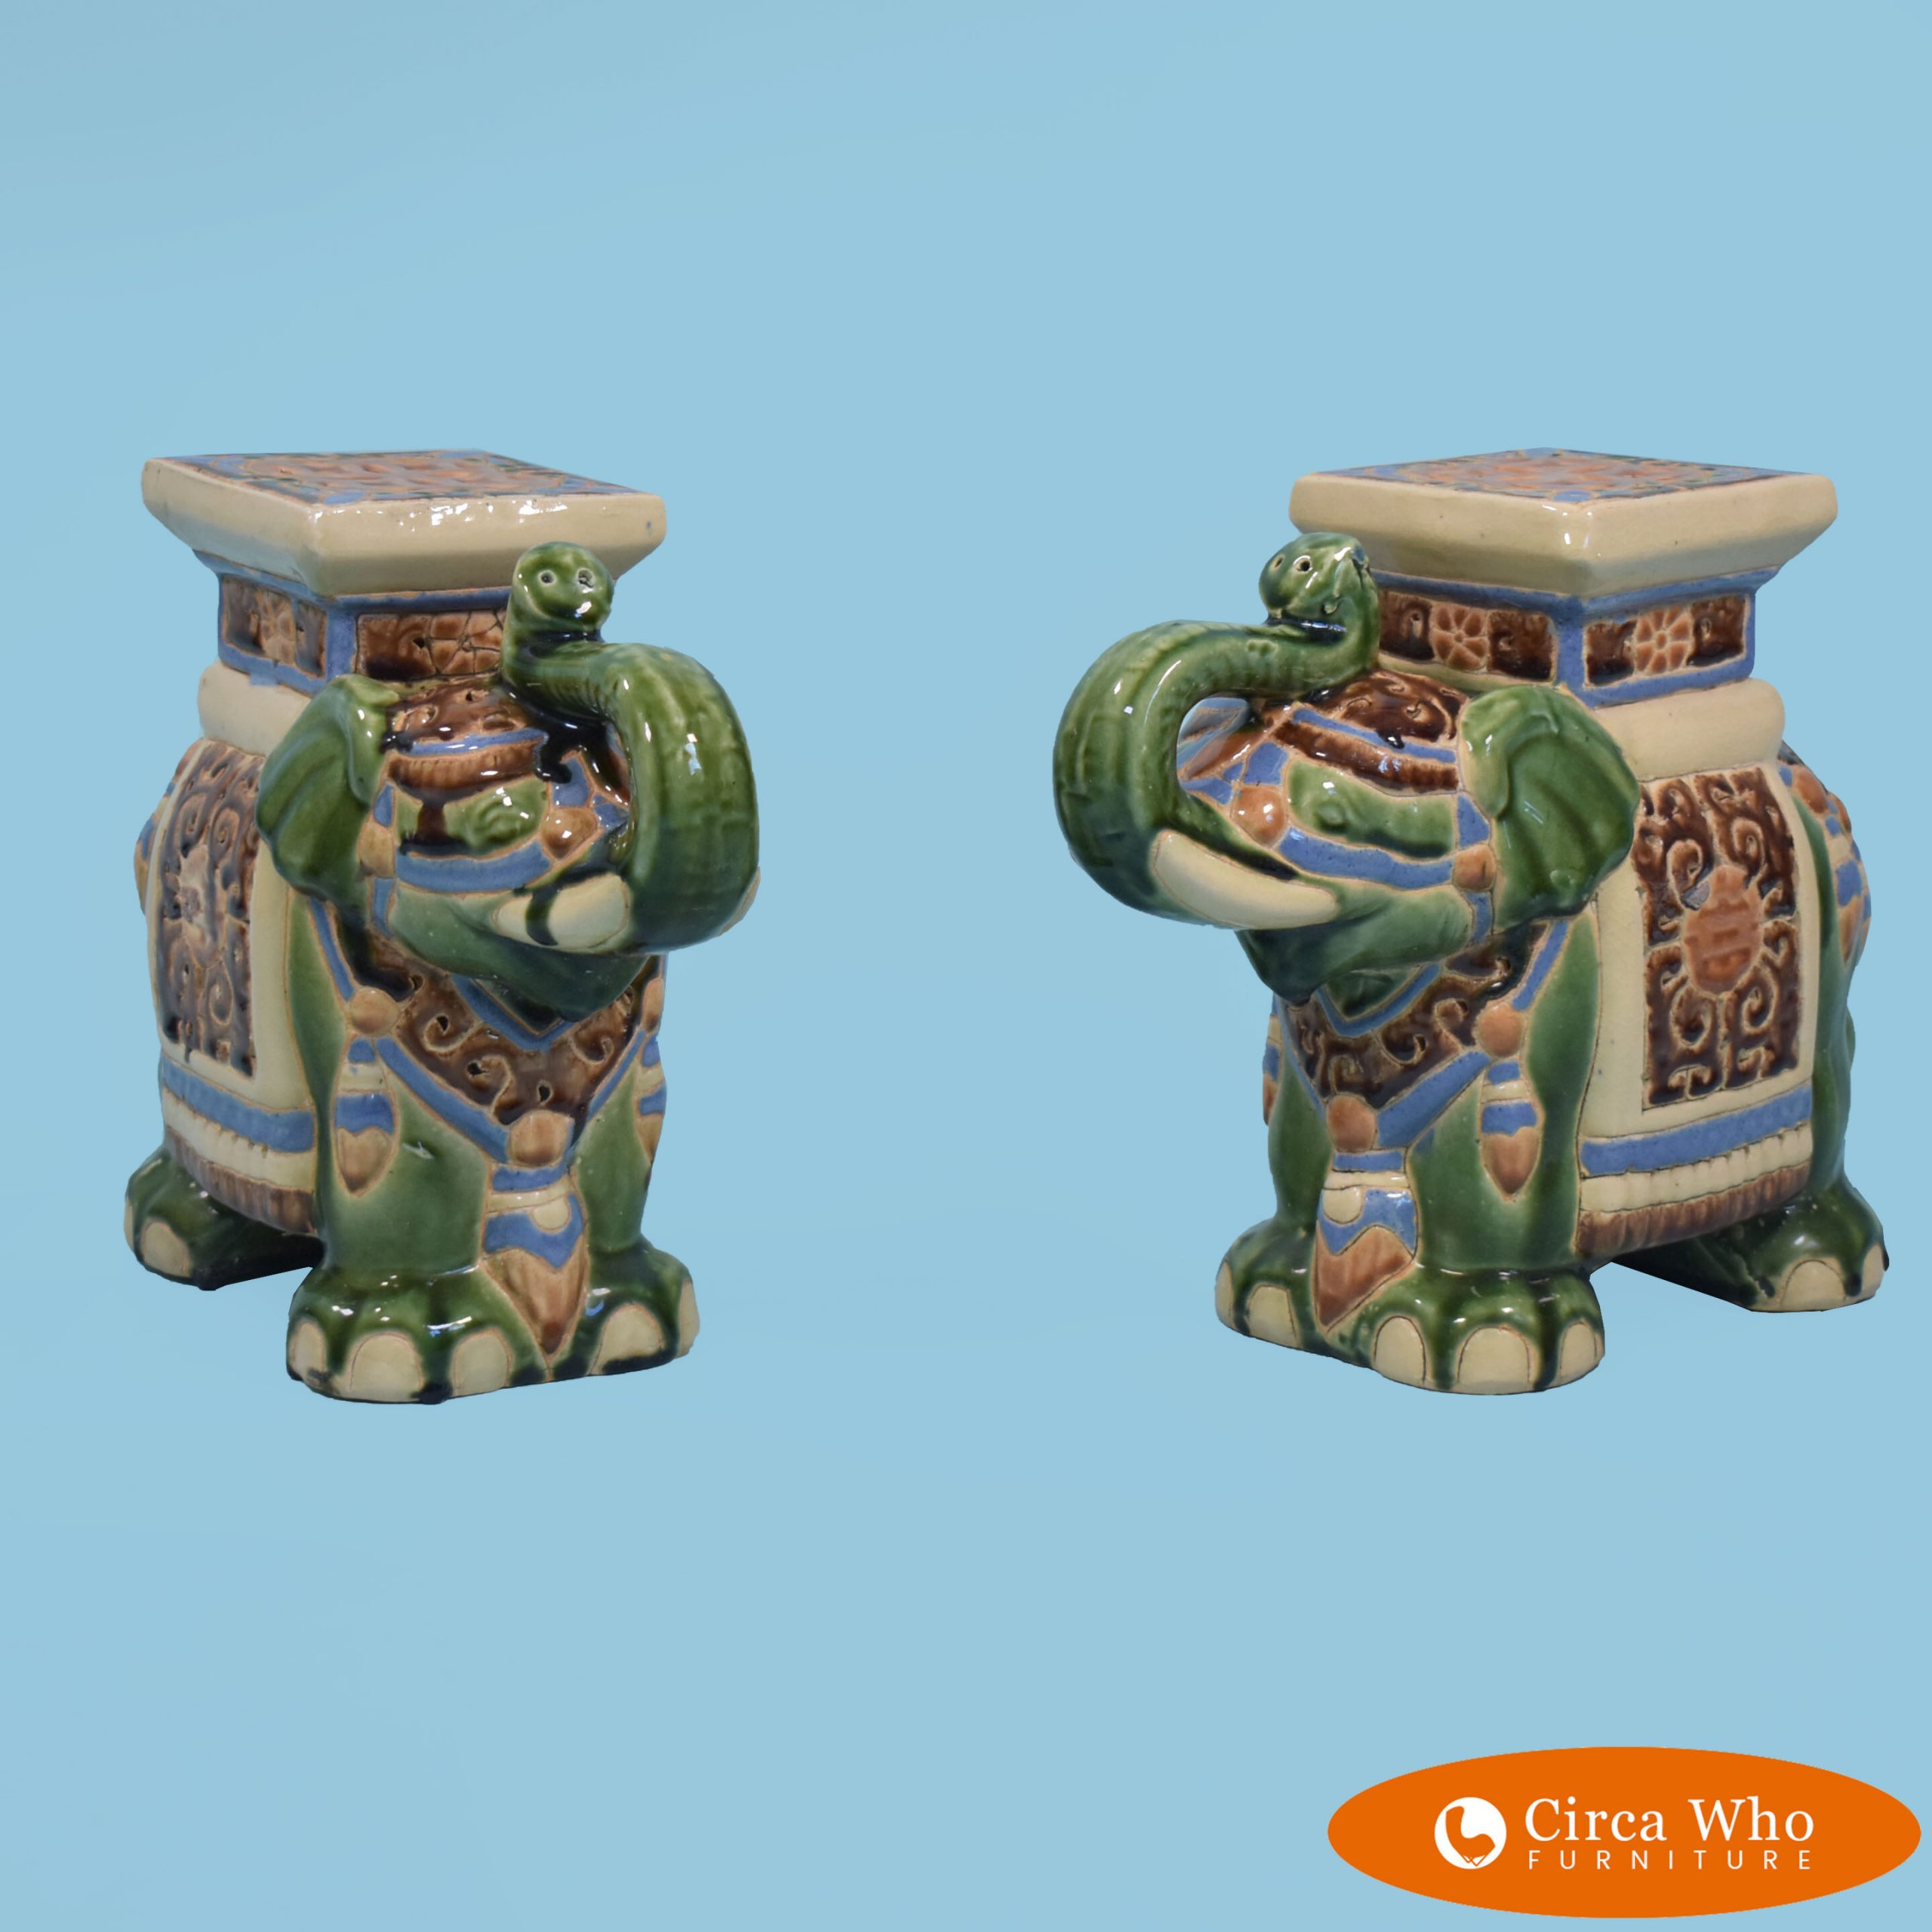 Pair of Small Green Ceramic Elephants